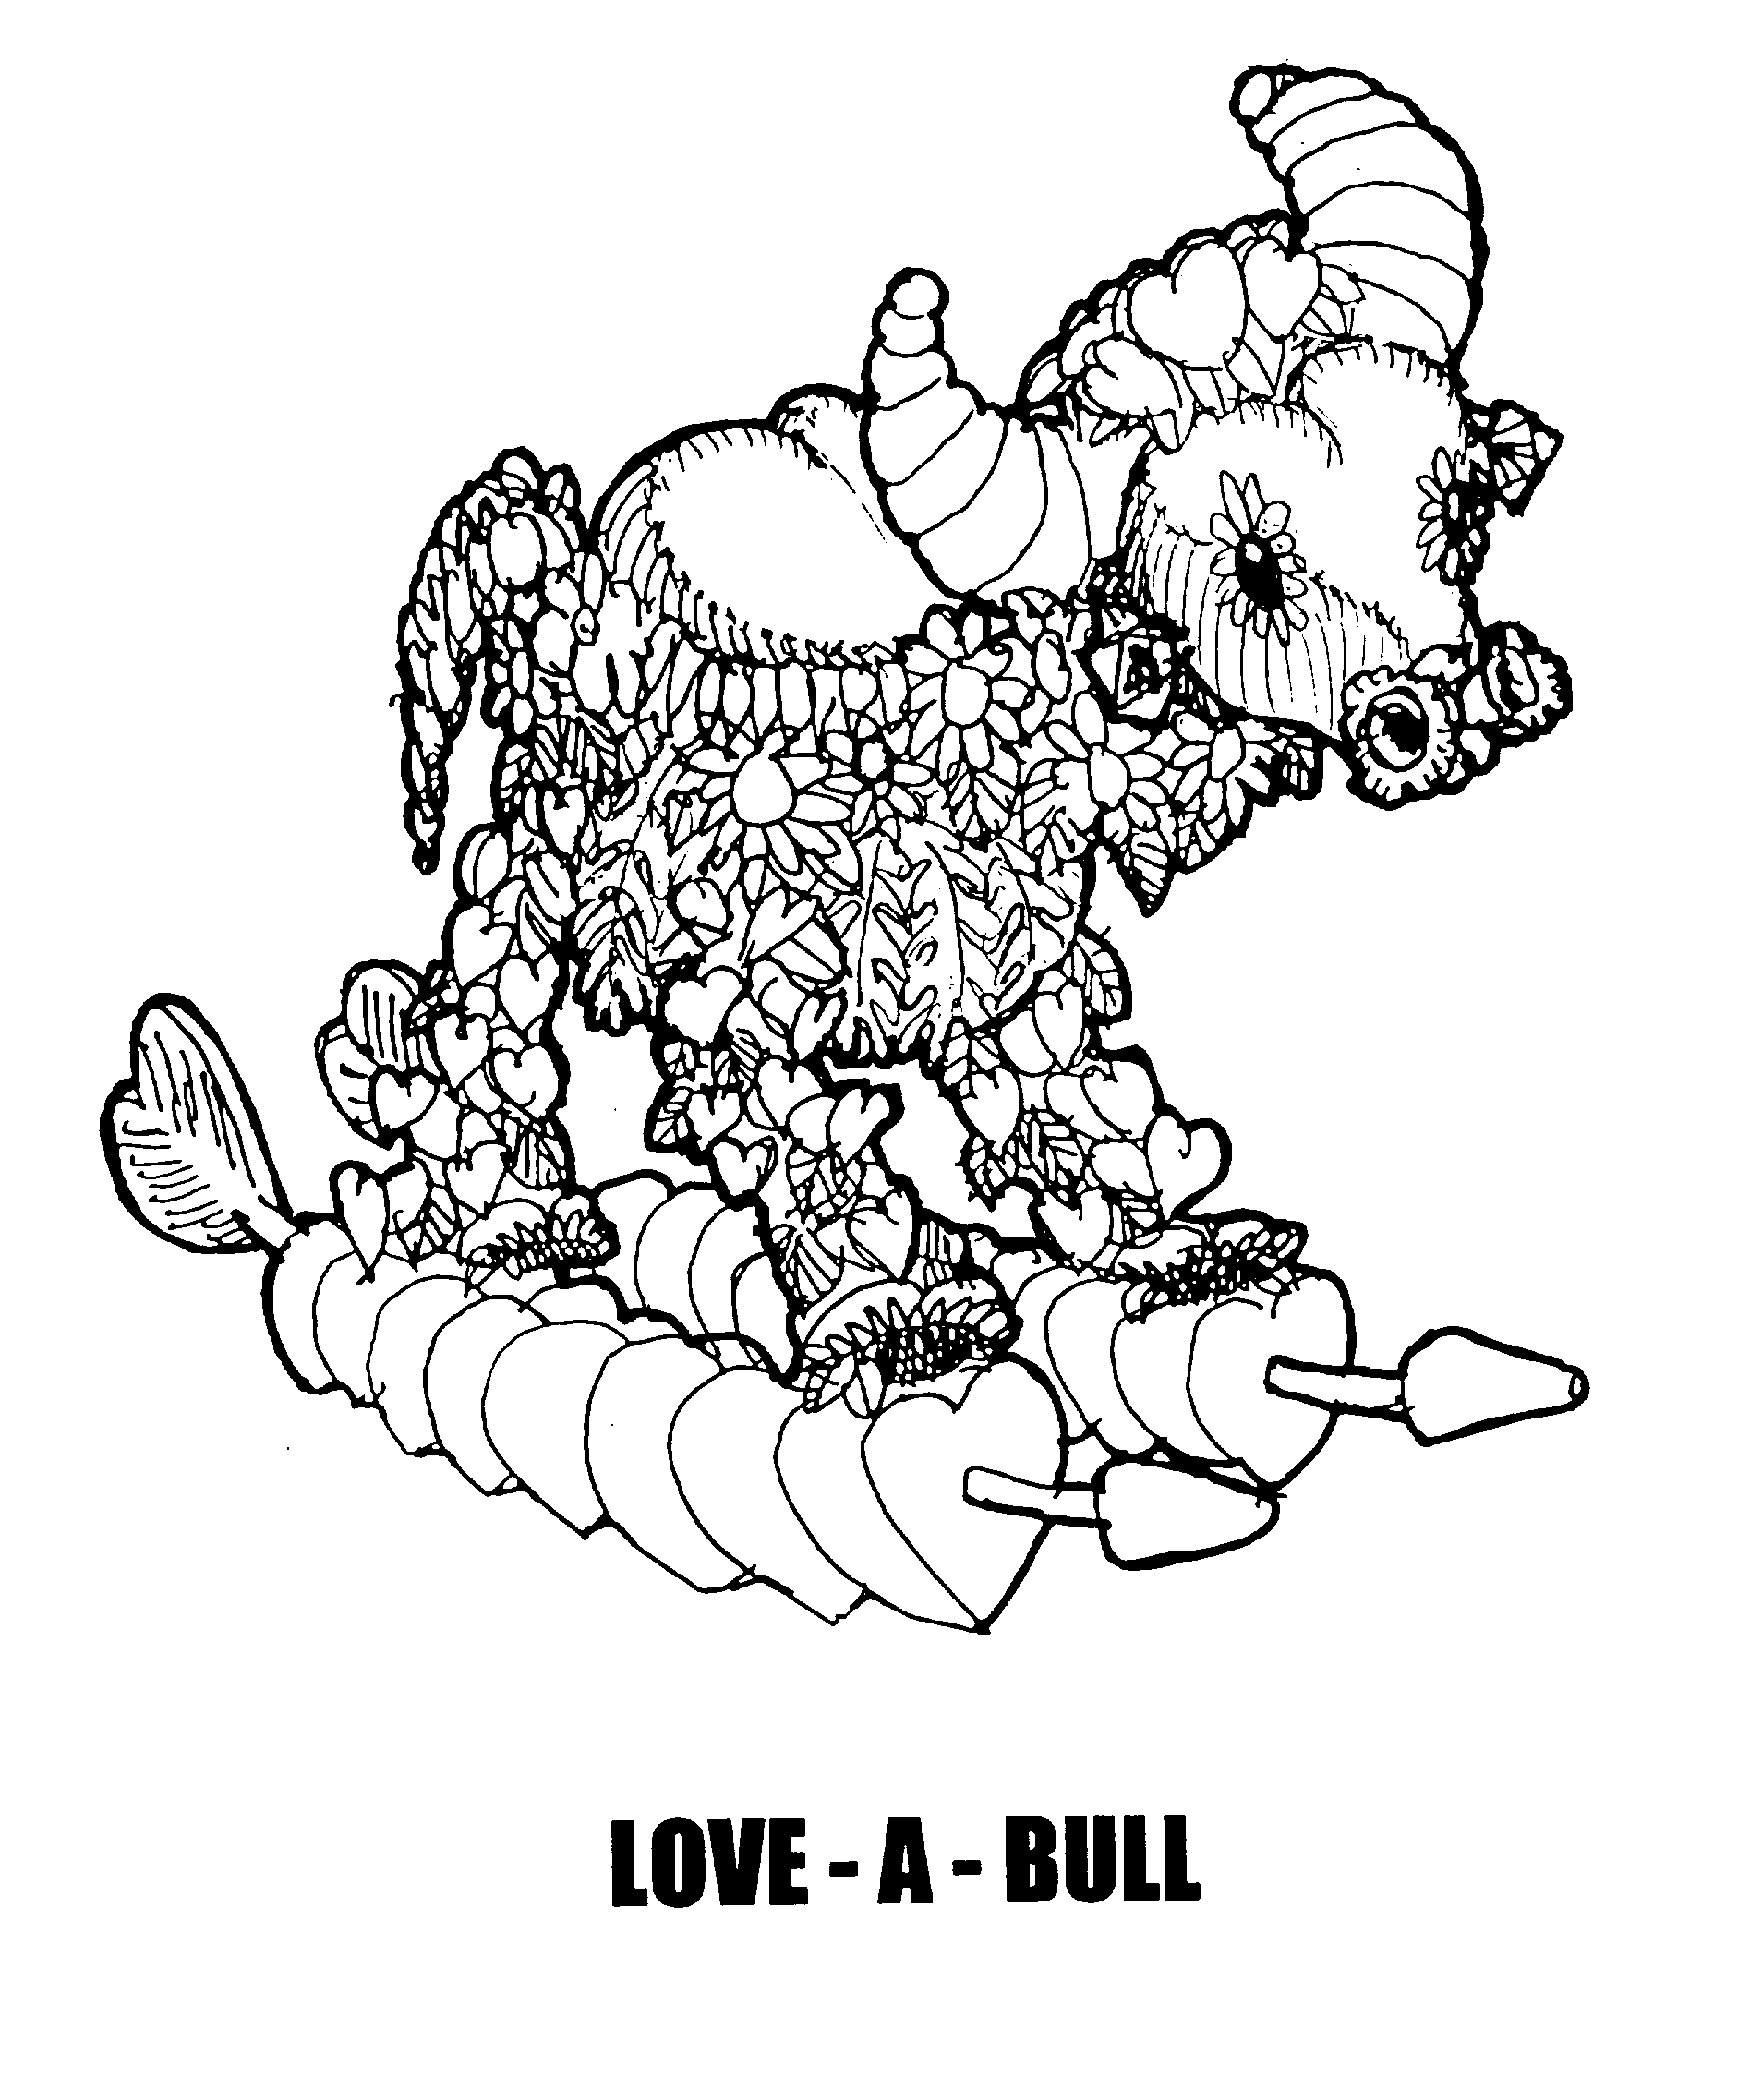  LOVE - A - BULL